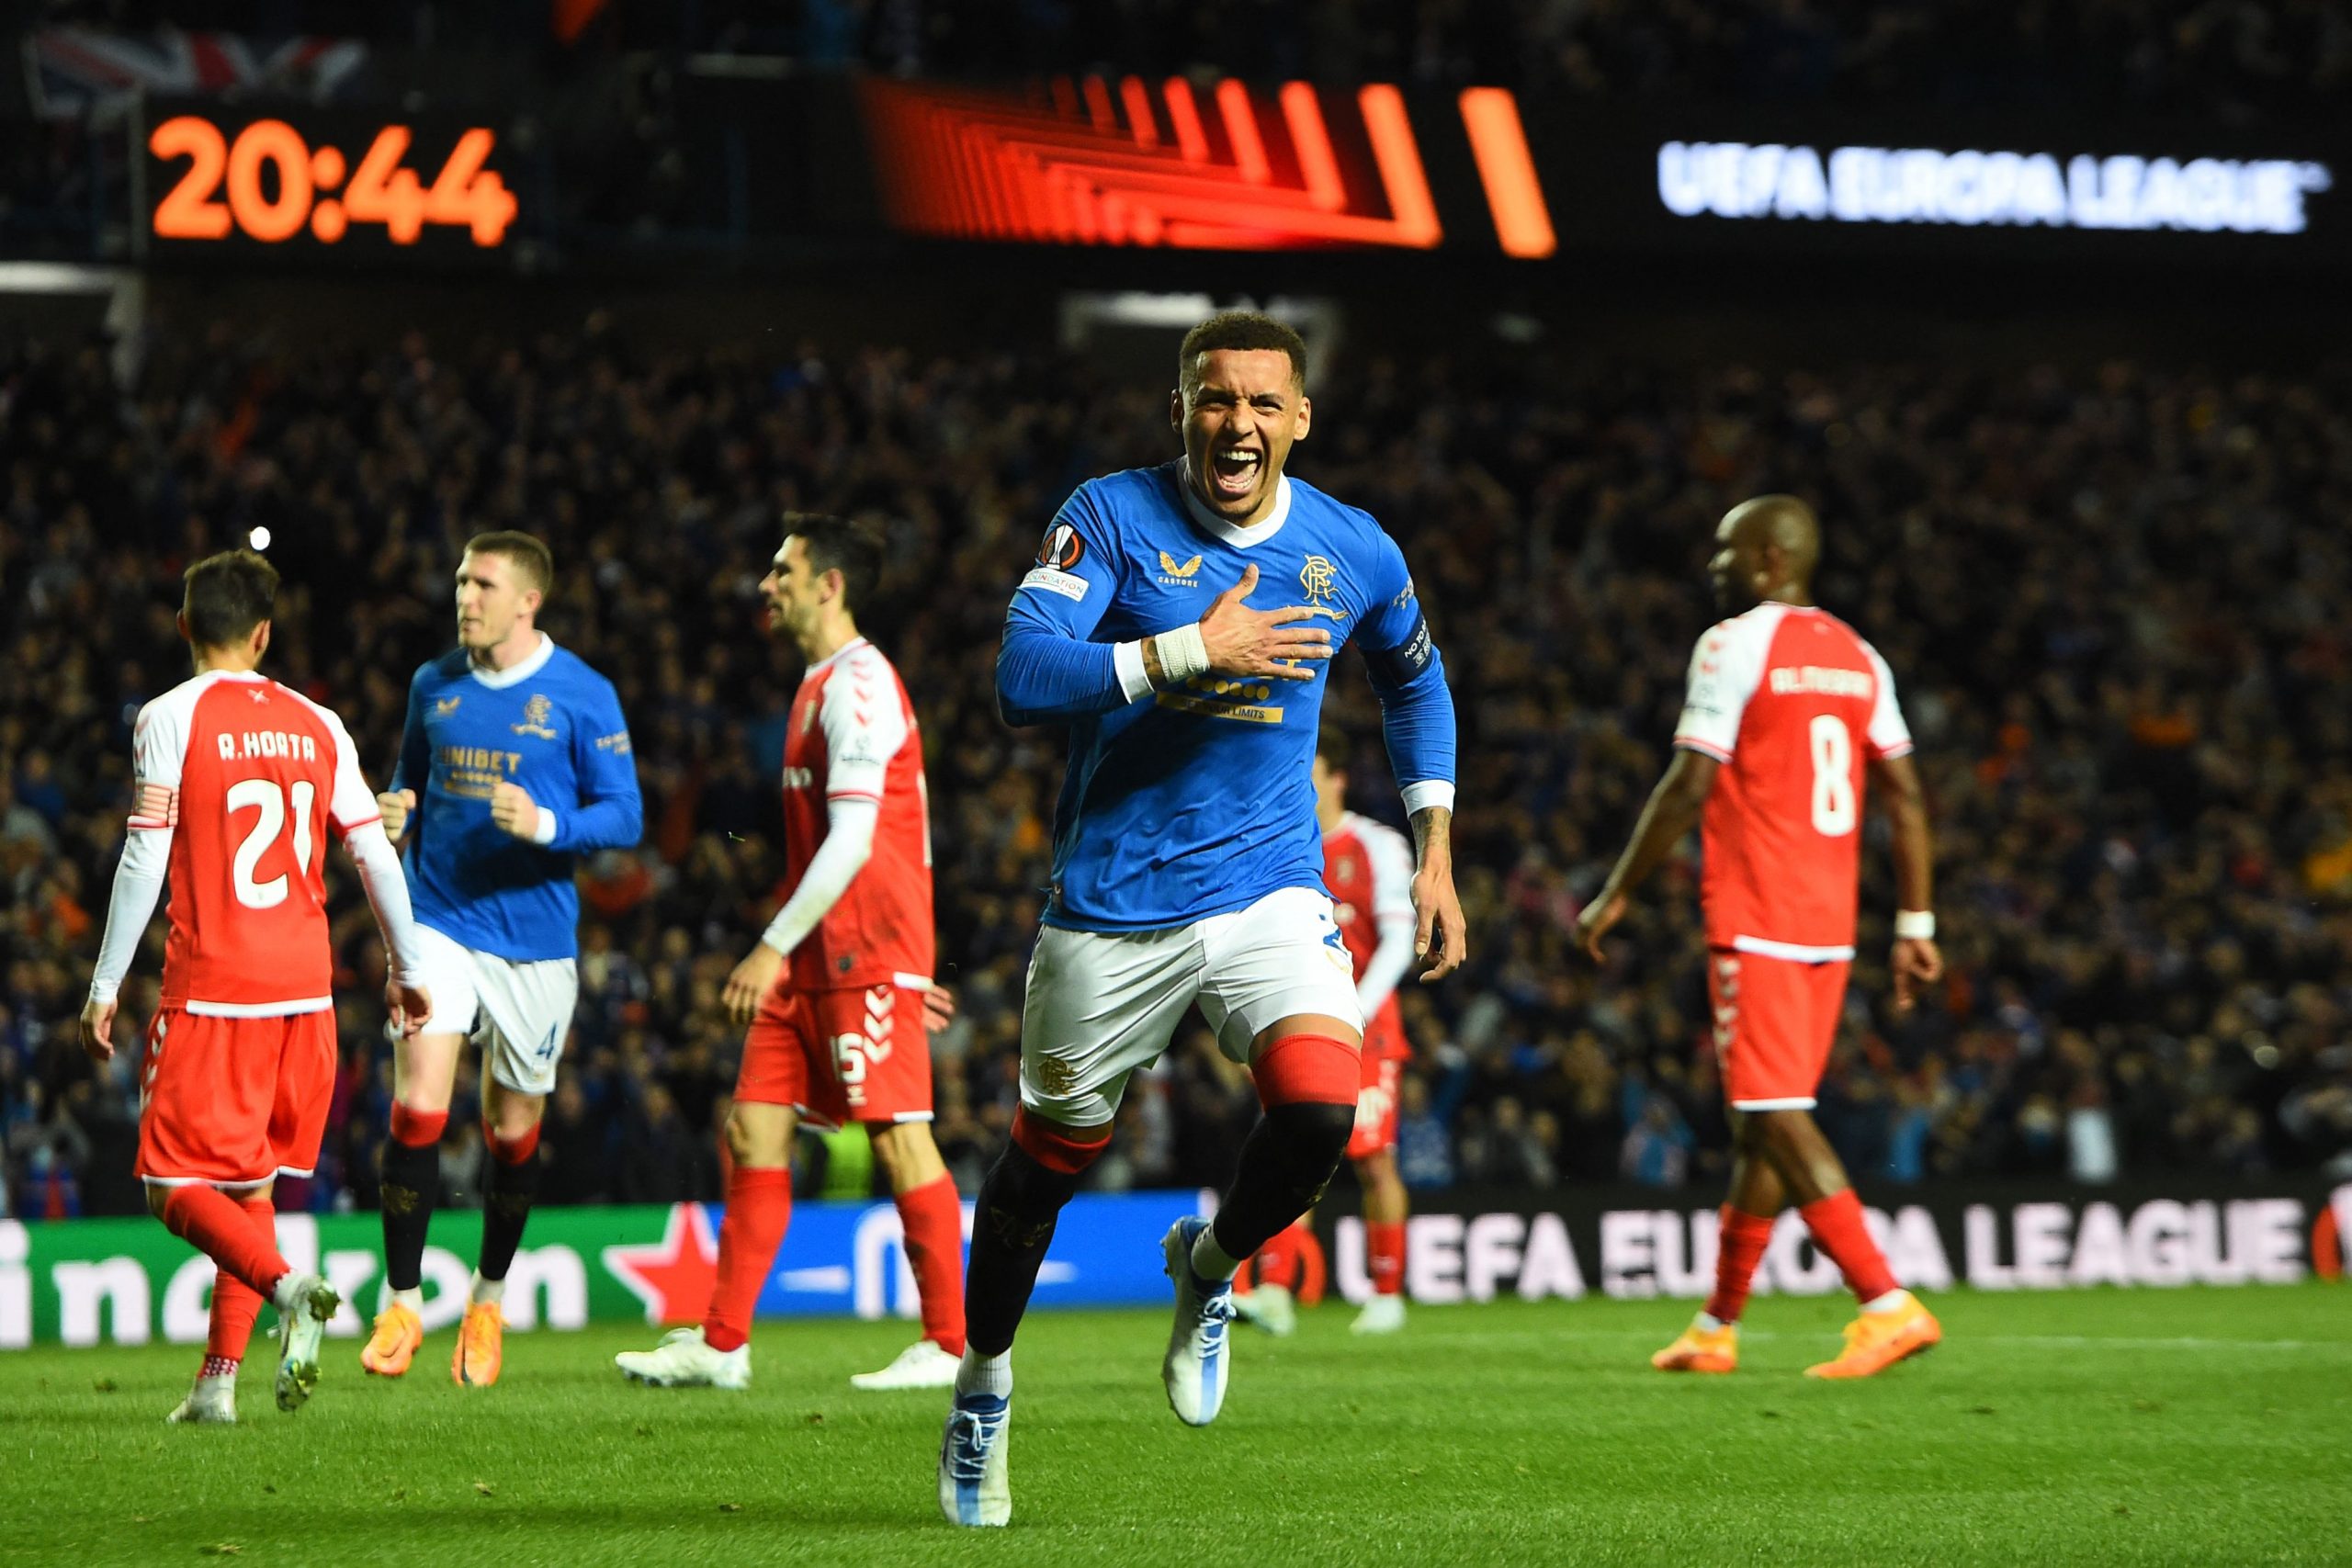 Rangers skipper James Tavernier celebrates his goal against Braga